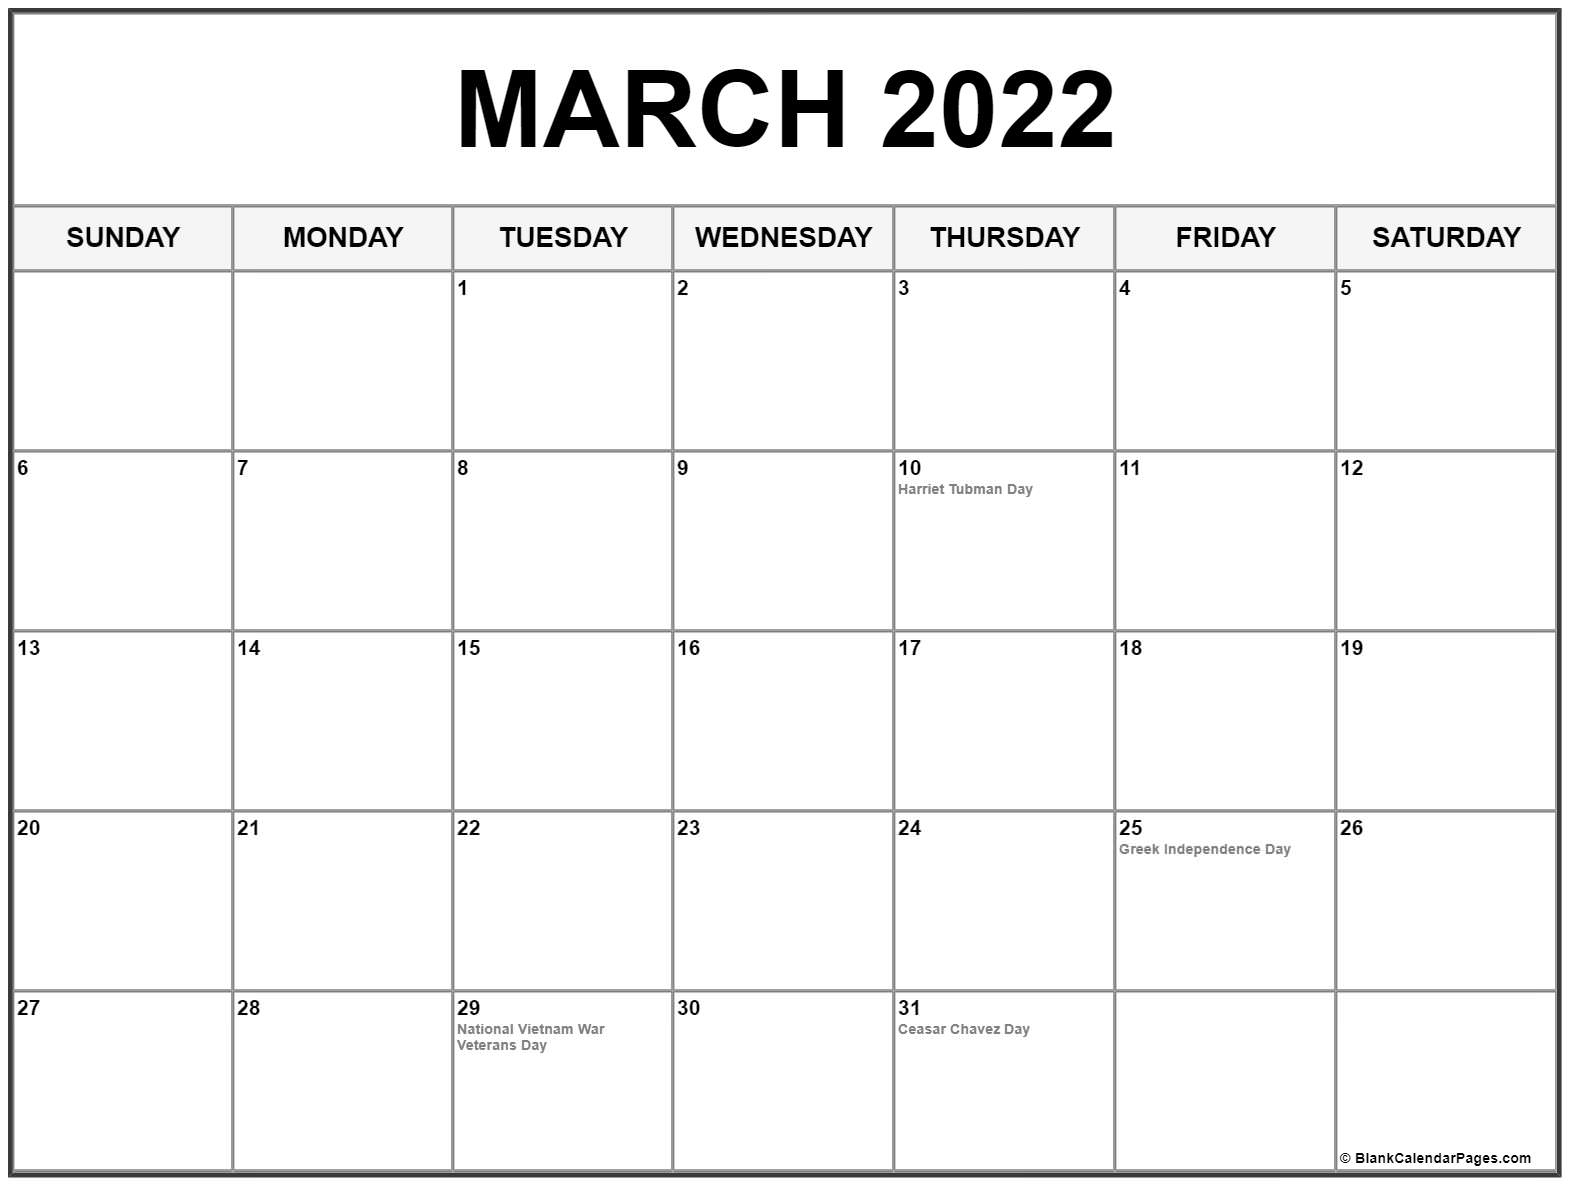 Easter 2022 Calendar - Nexta